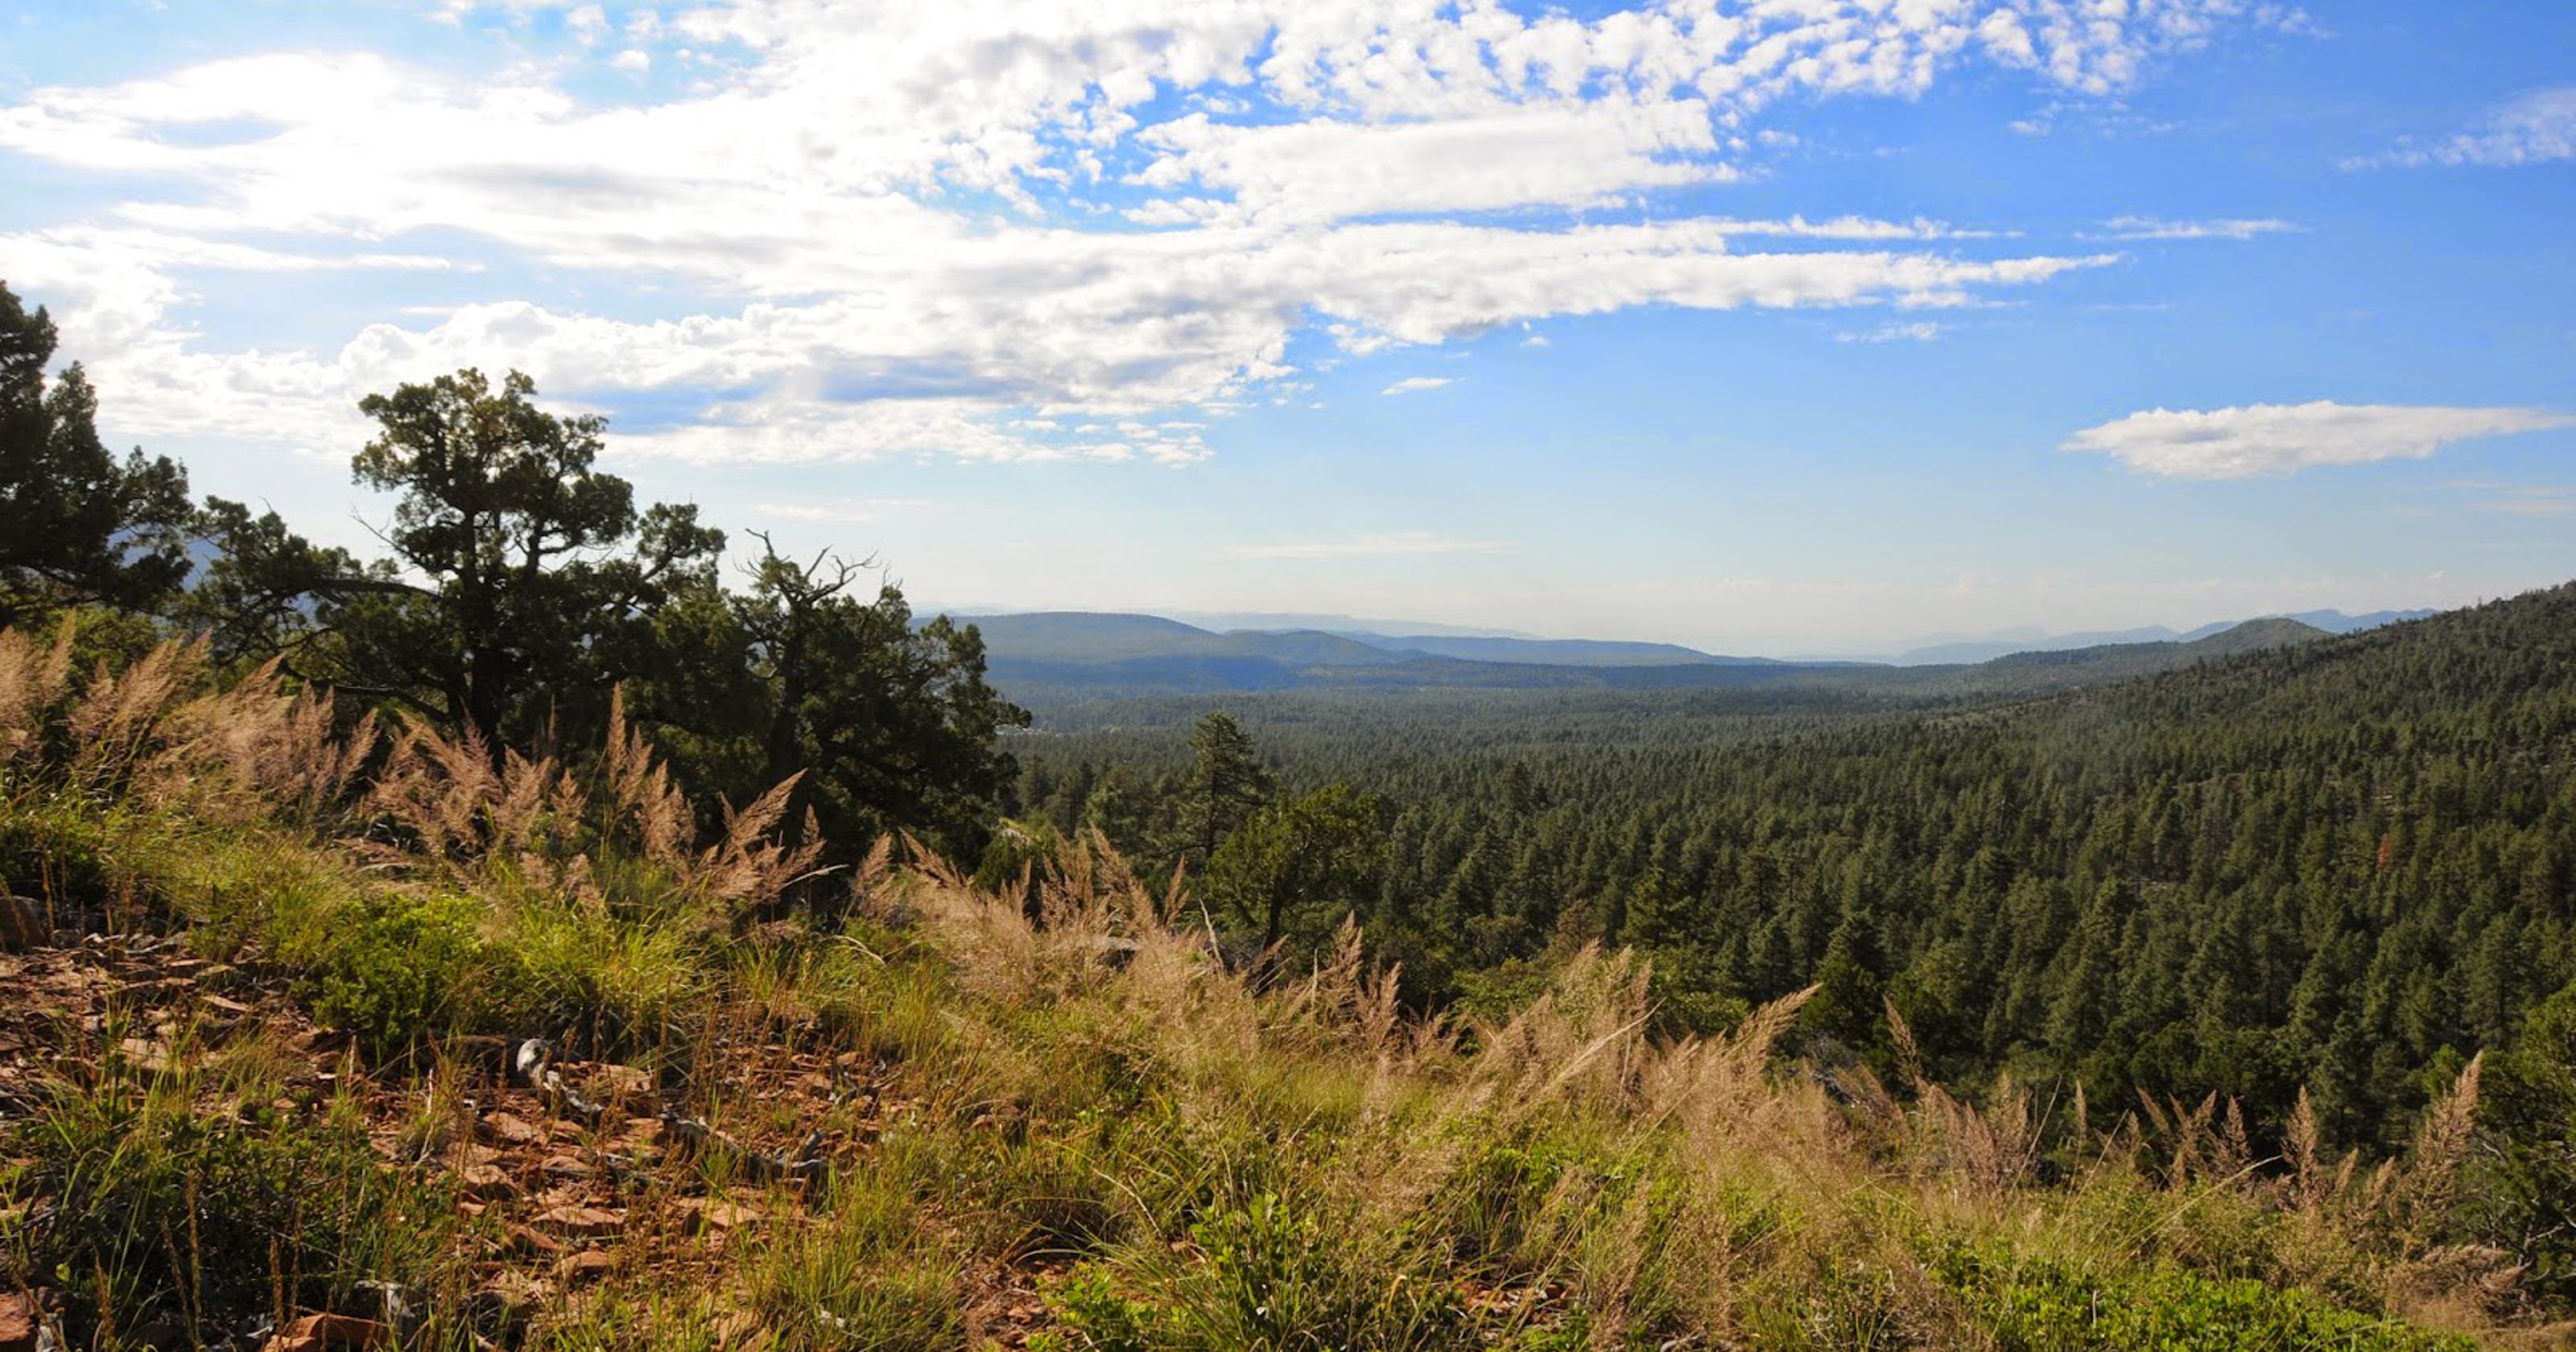 Arizona hike: Bearfoot Trail in Pine